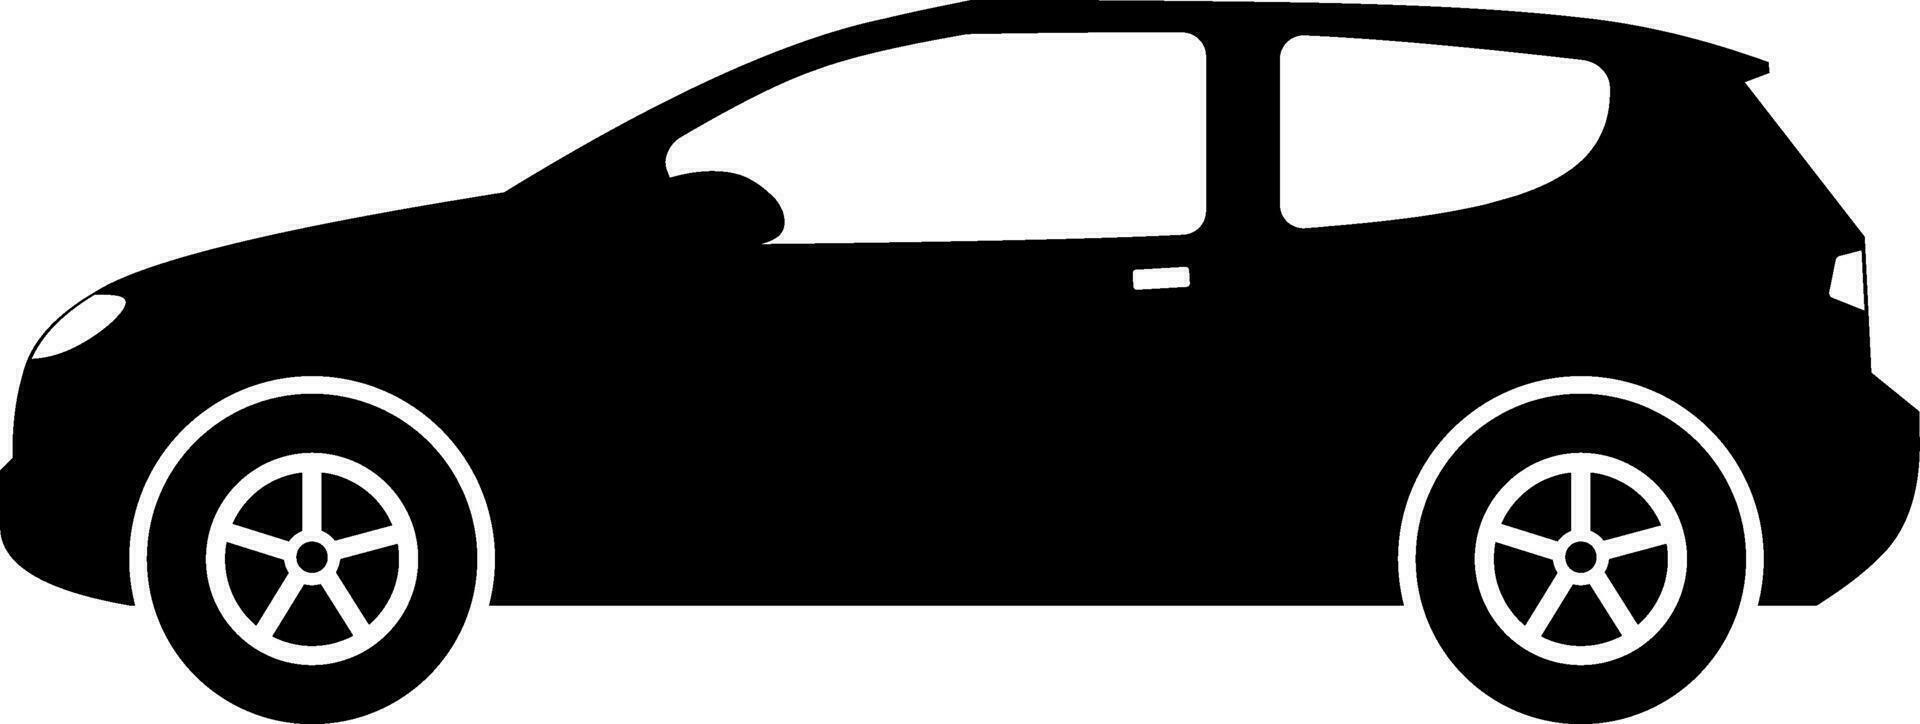 hatchback coche icono vector. Transversal coche silueta para icono, símbolo o signo. hatchback coche gráfico recurso para transporte o automotor vector